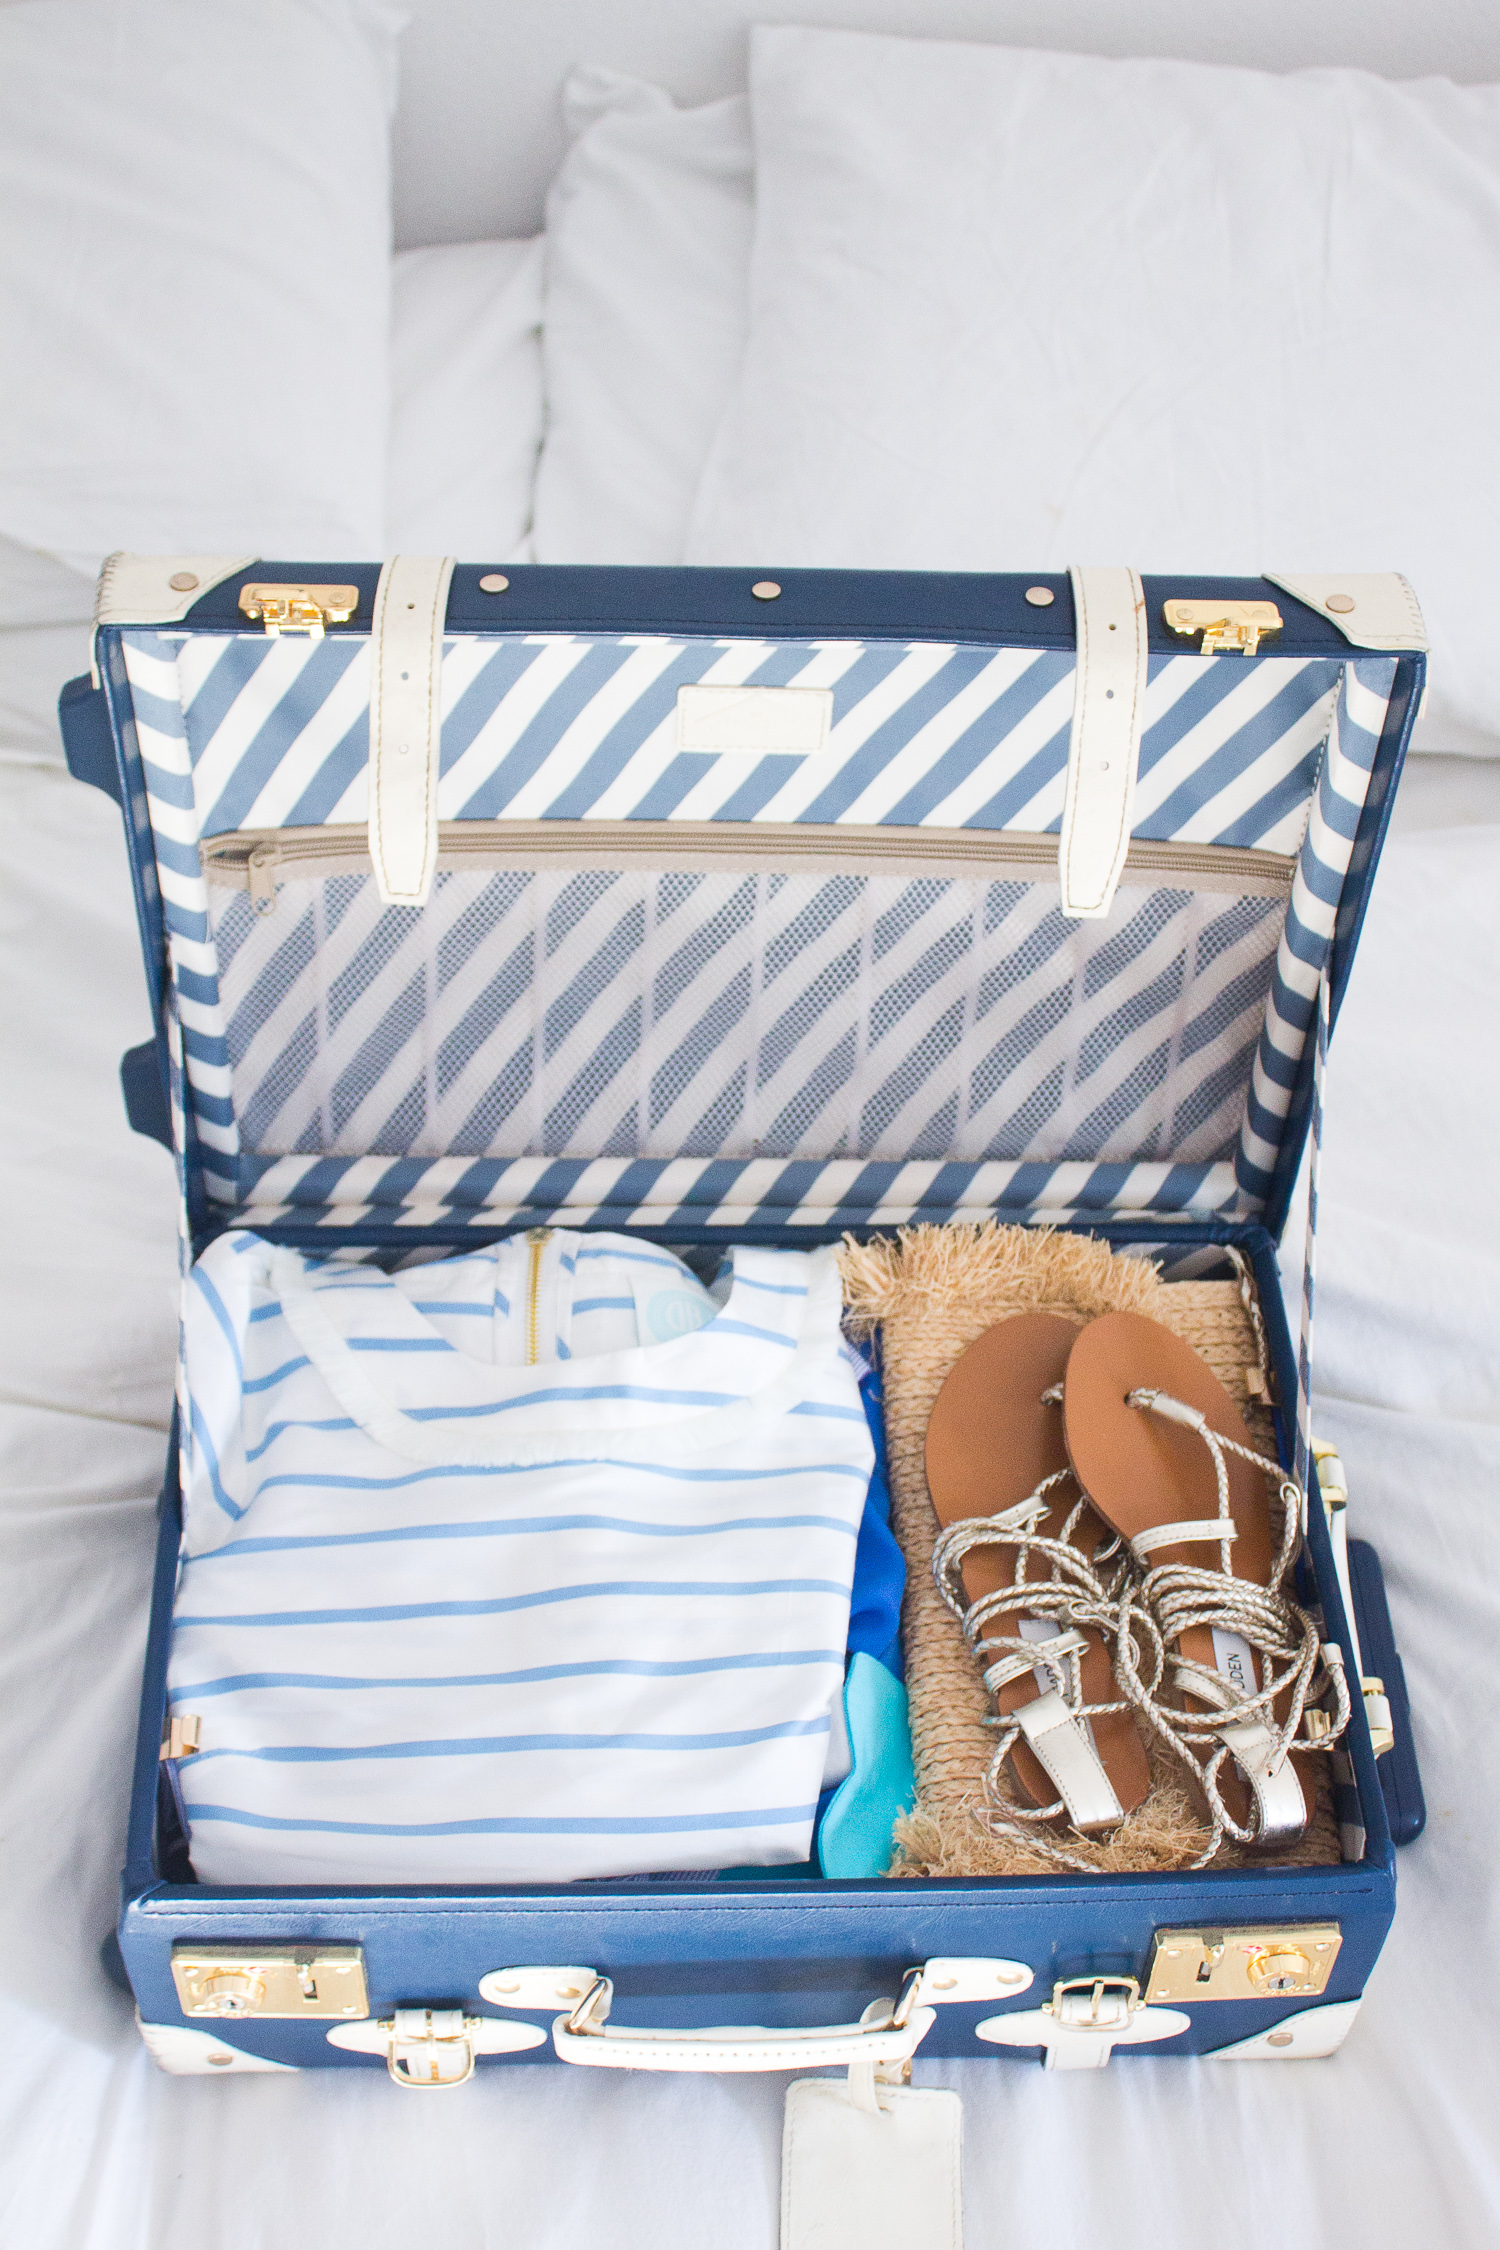 ipack suitcase